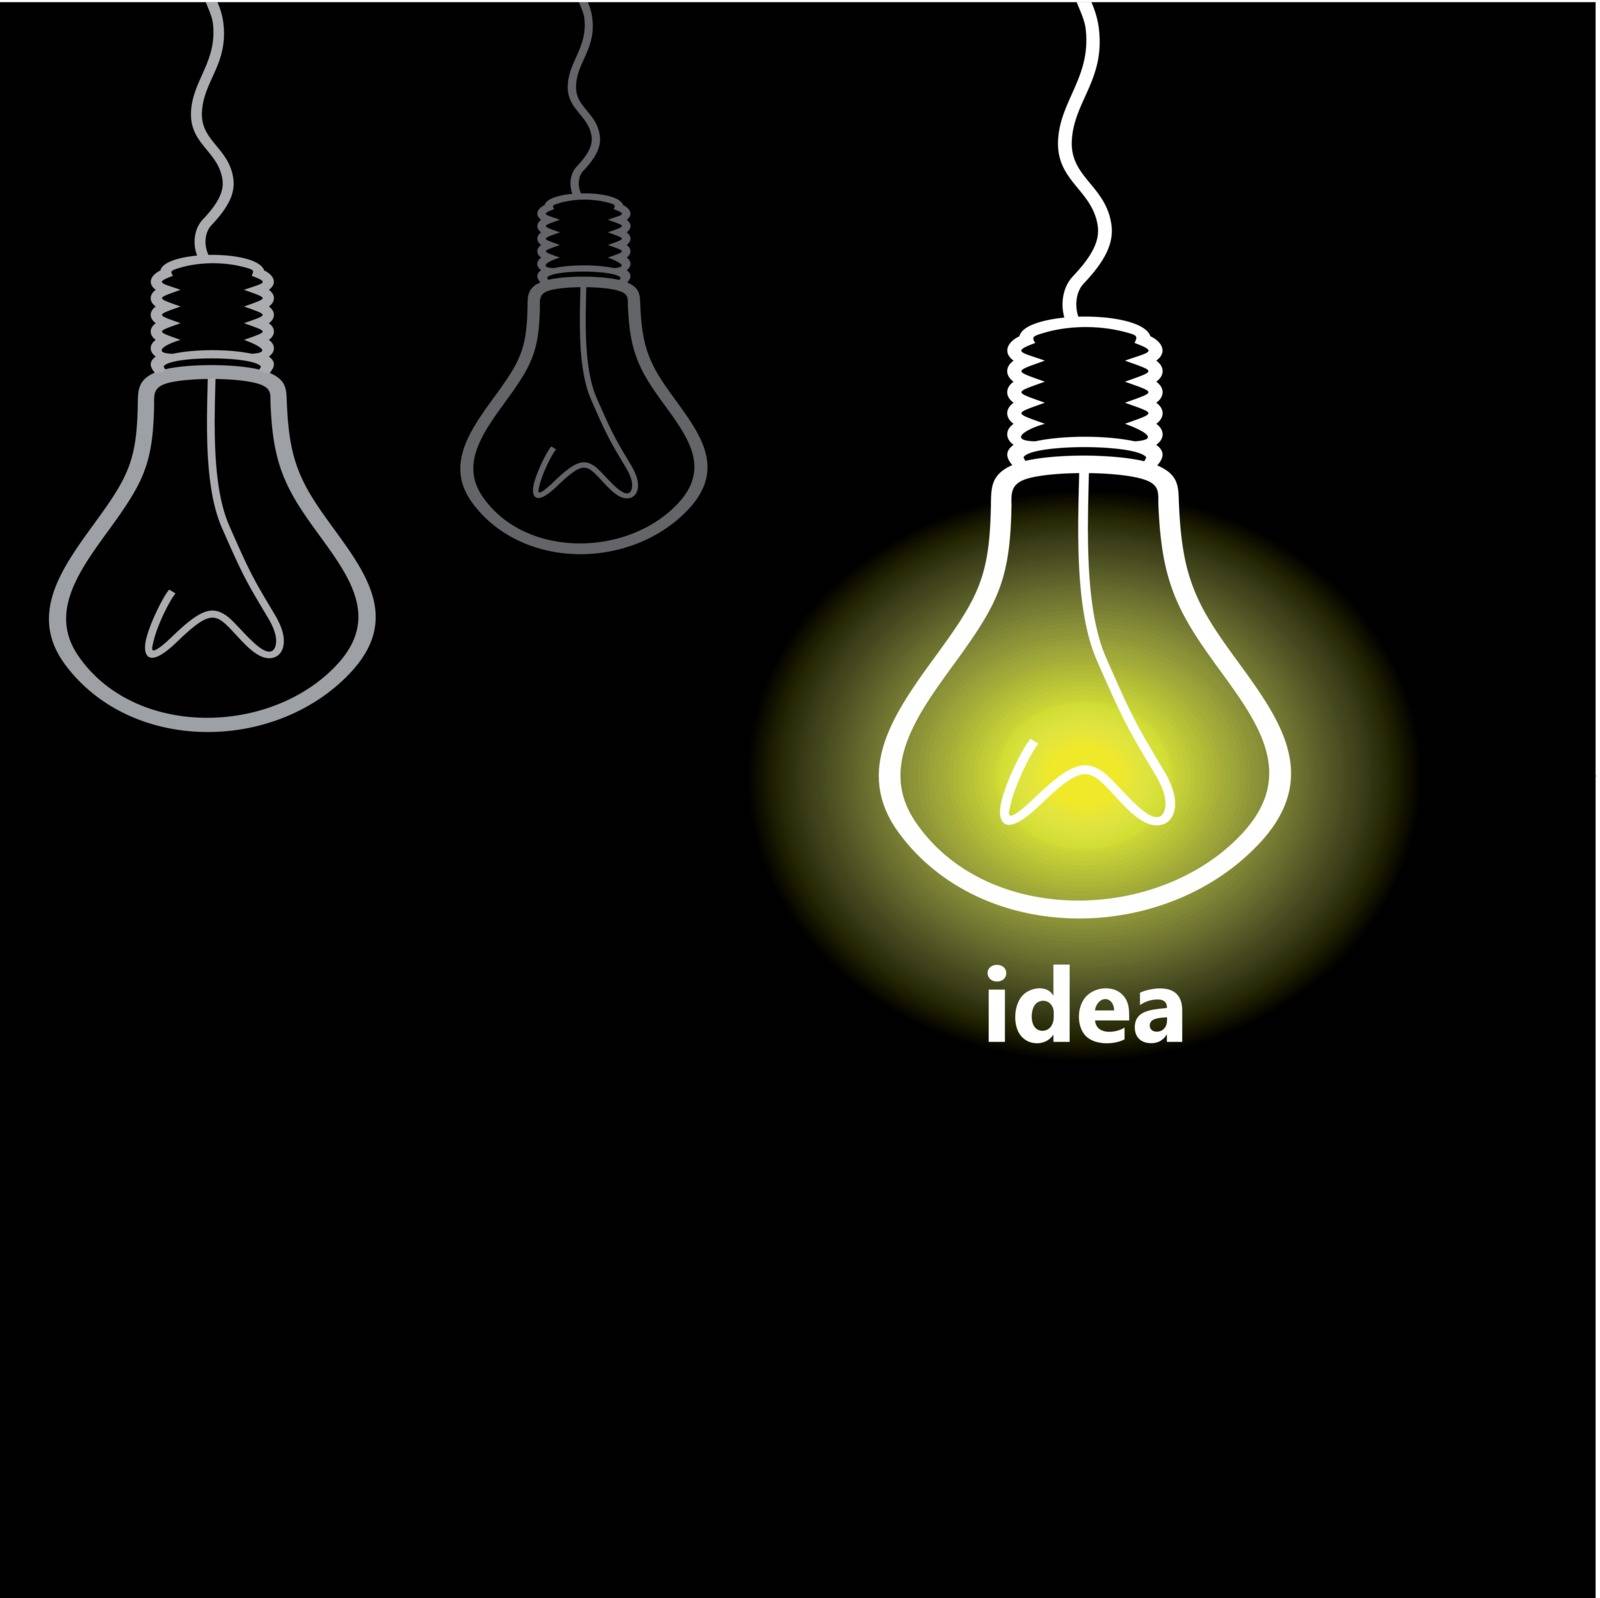 Idea a bulb by aleksander1